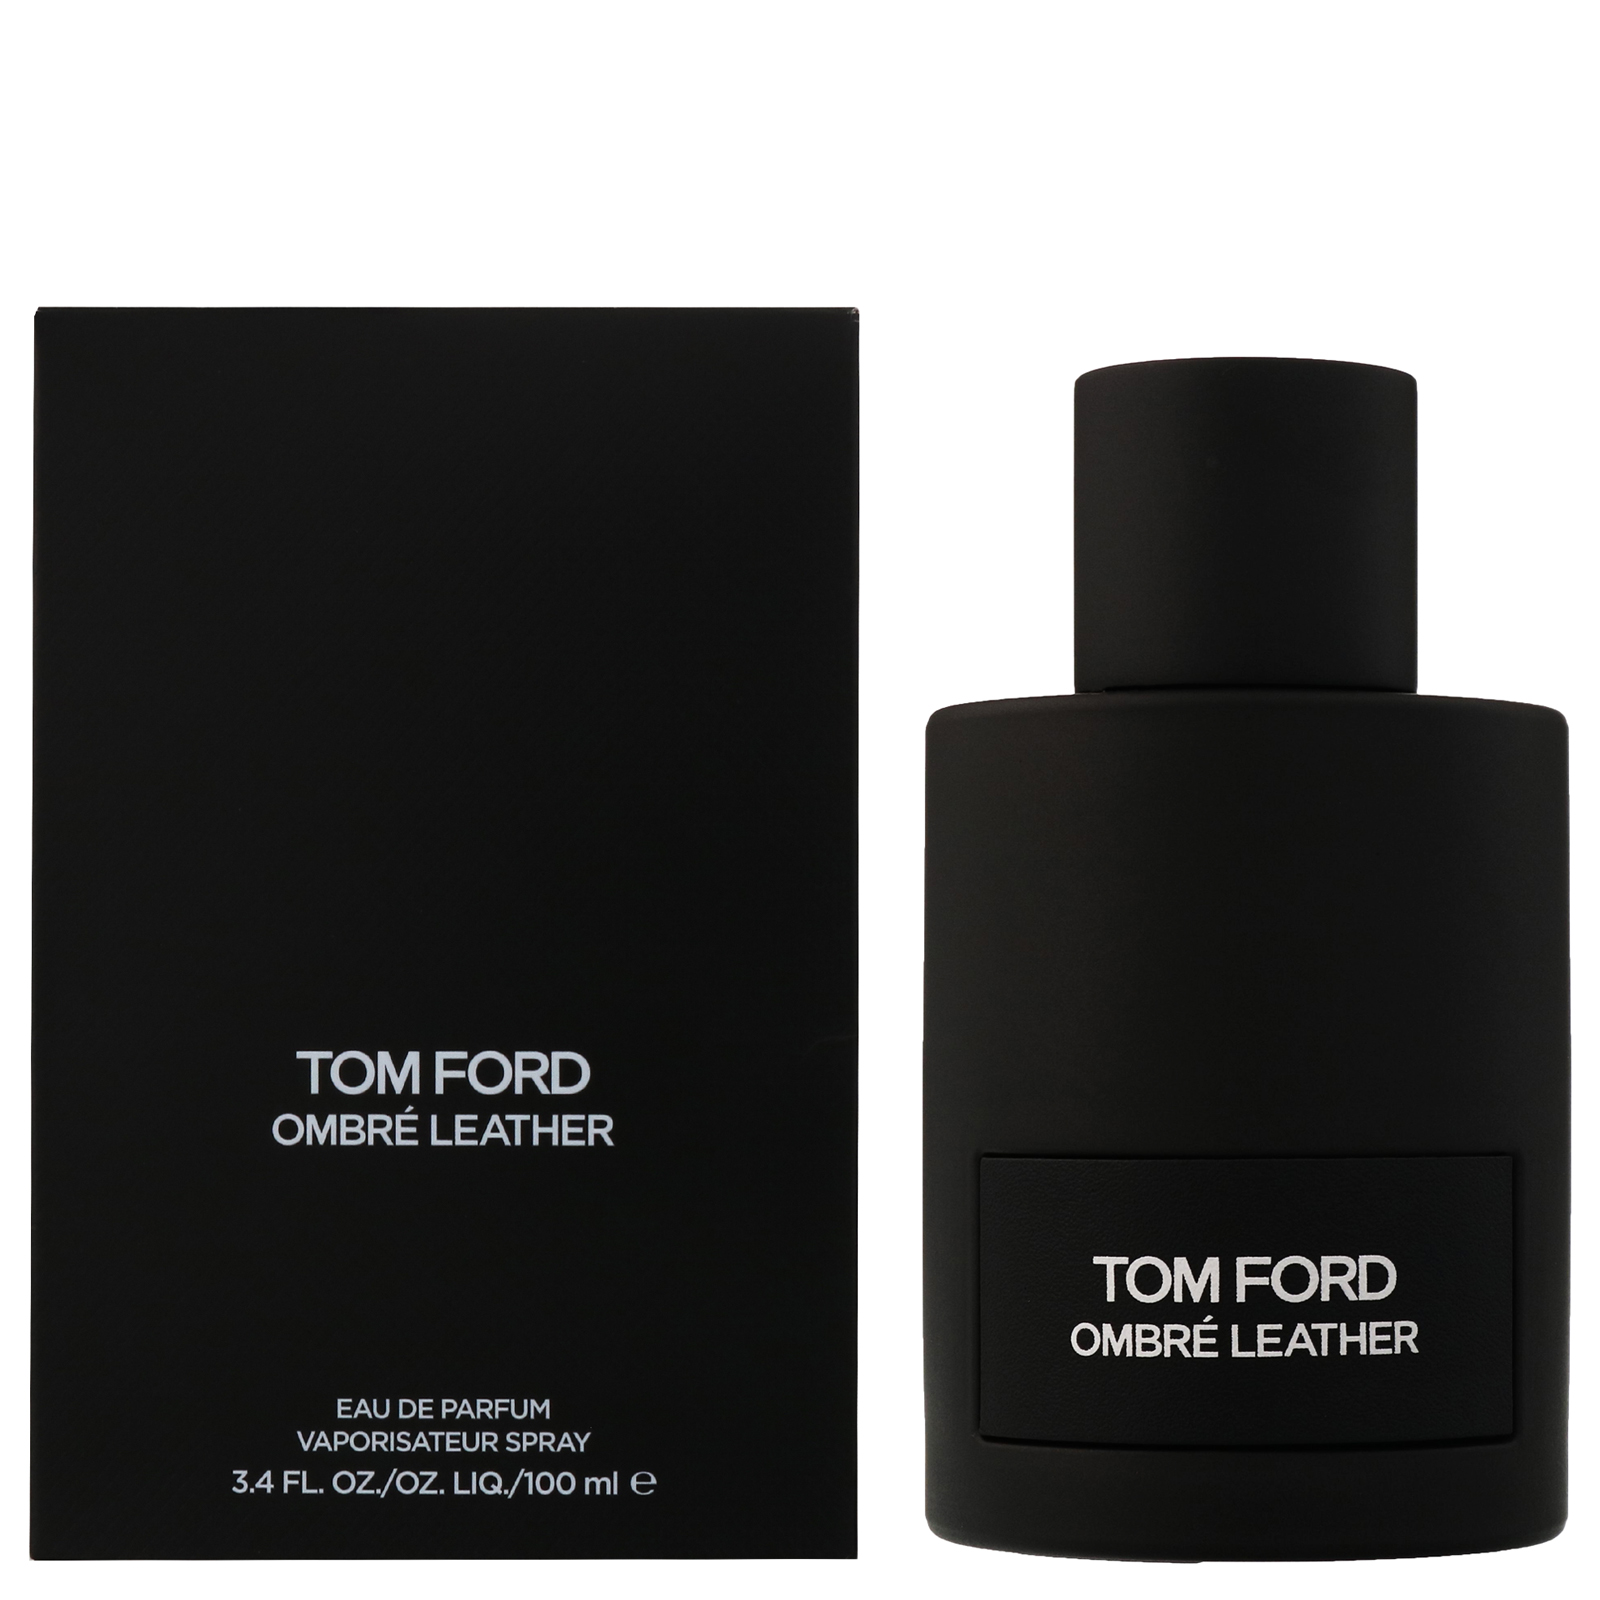 Aromabrand.gr Shop > Tom Ford > Tom Ford Ombre Leather Eau De Parfum 100ml